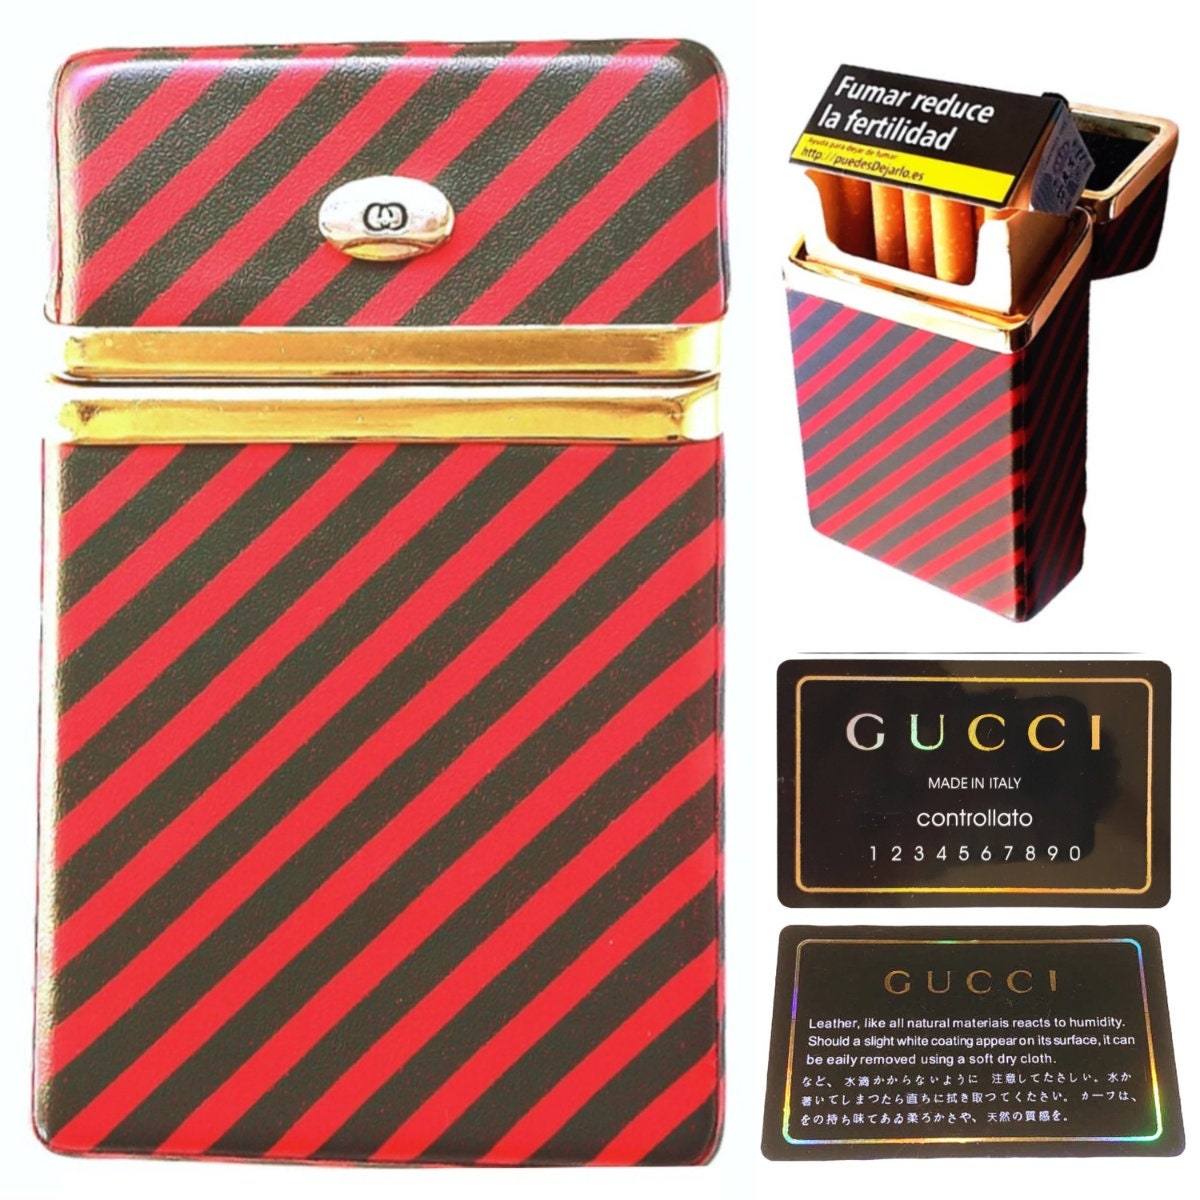 Gucci, Accessories, Gucci Cigarette Case Or Card Case Brown Coated Canvas